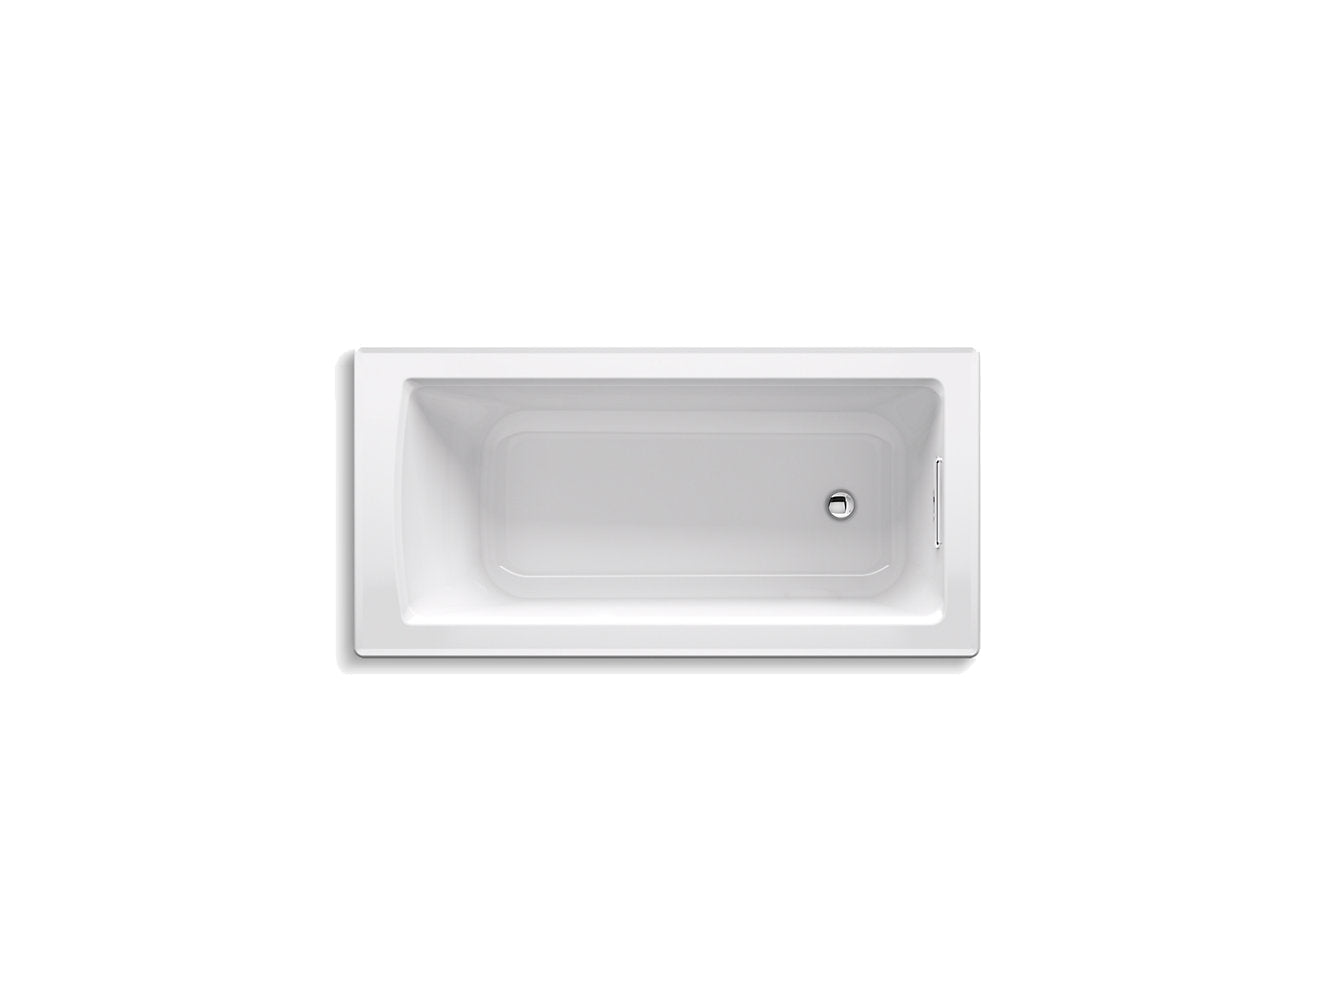 Kohler Archer 60" x 30" Drop-in Bathtub - White